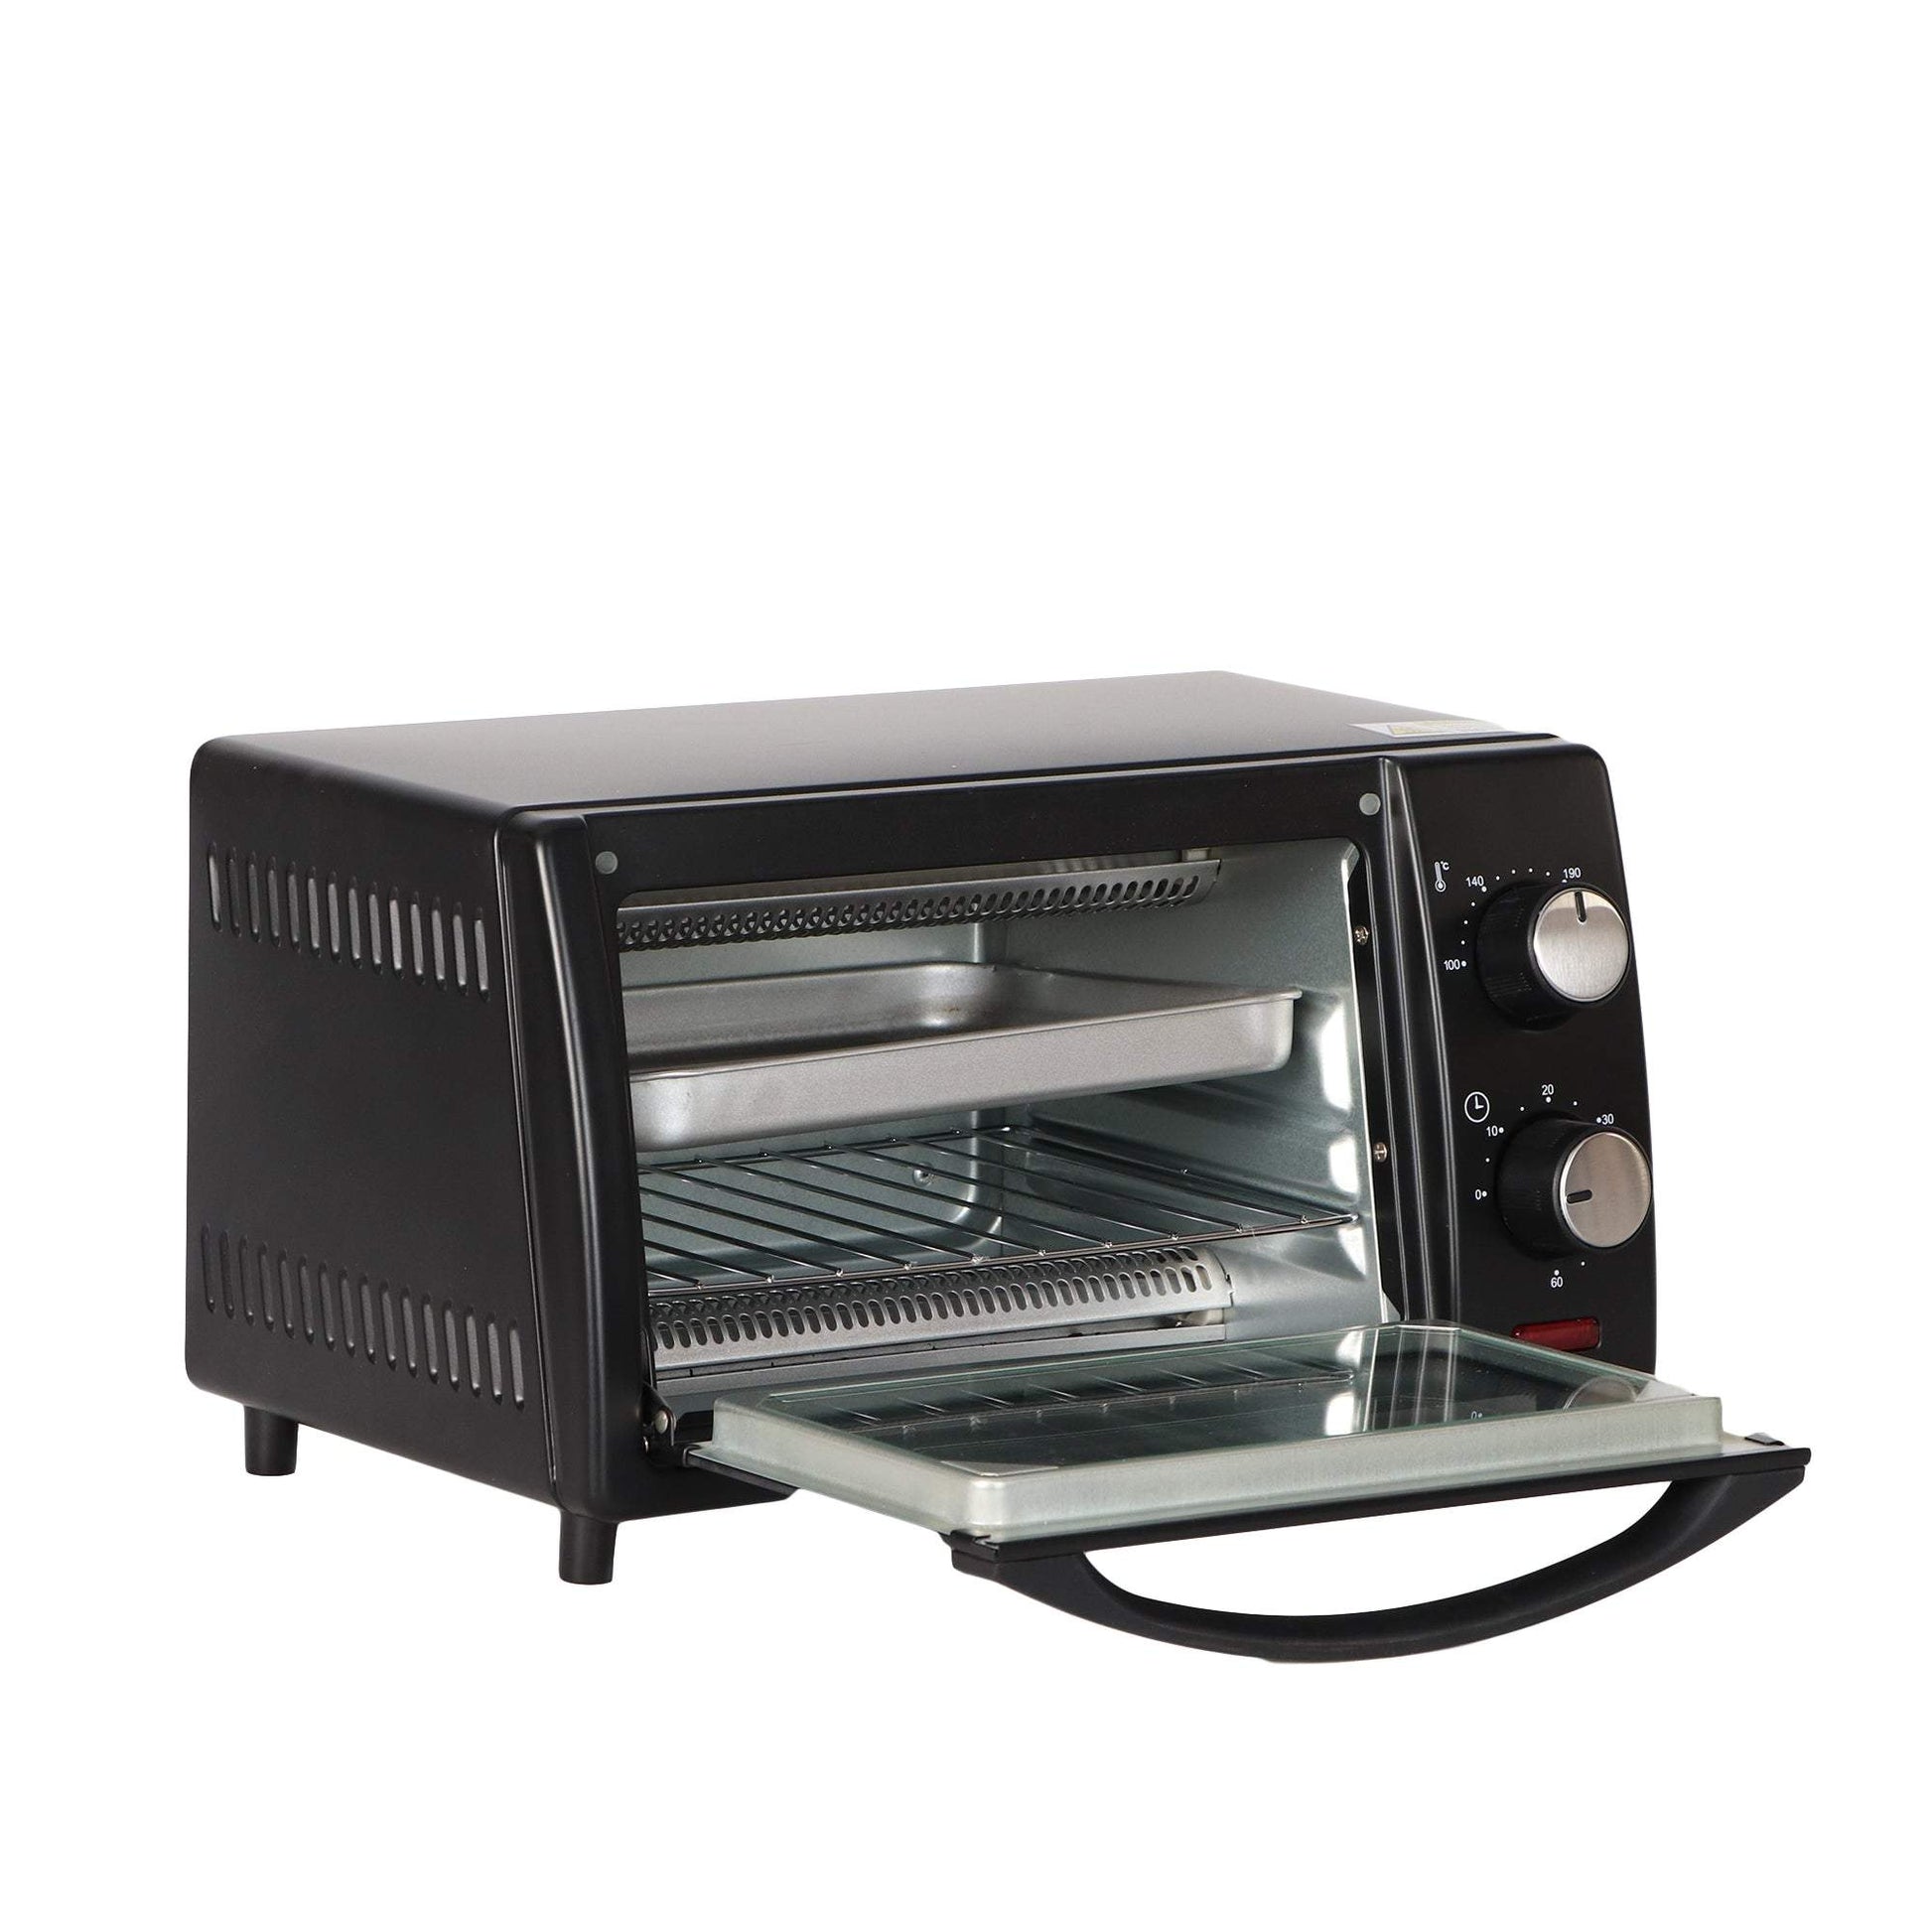 TZS First Mini oven 10 liters | 800 watts | 2 quartz elements-Royal Brands Co-